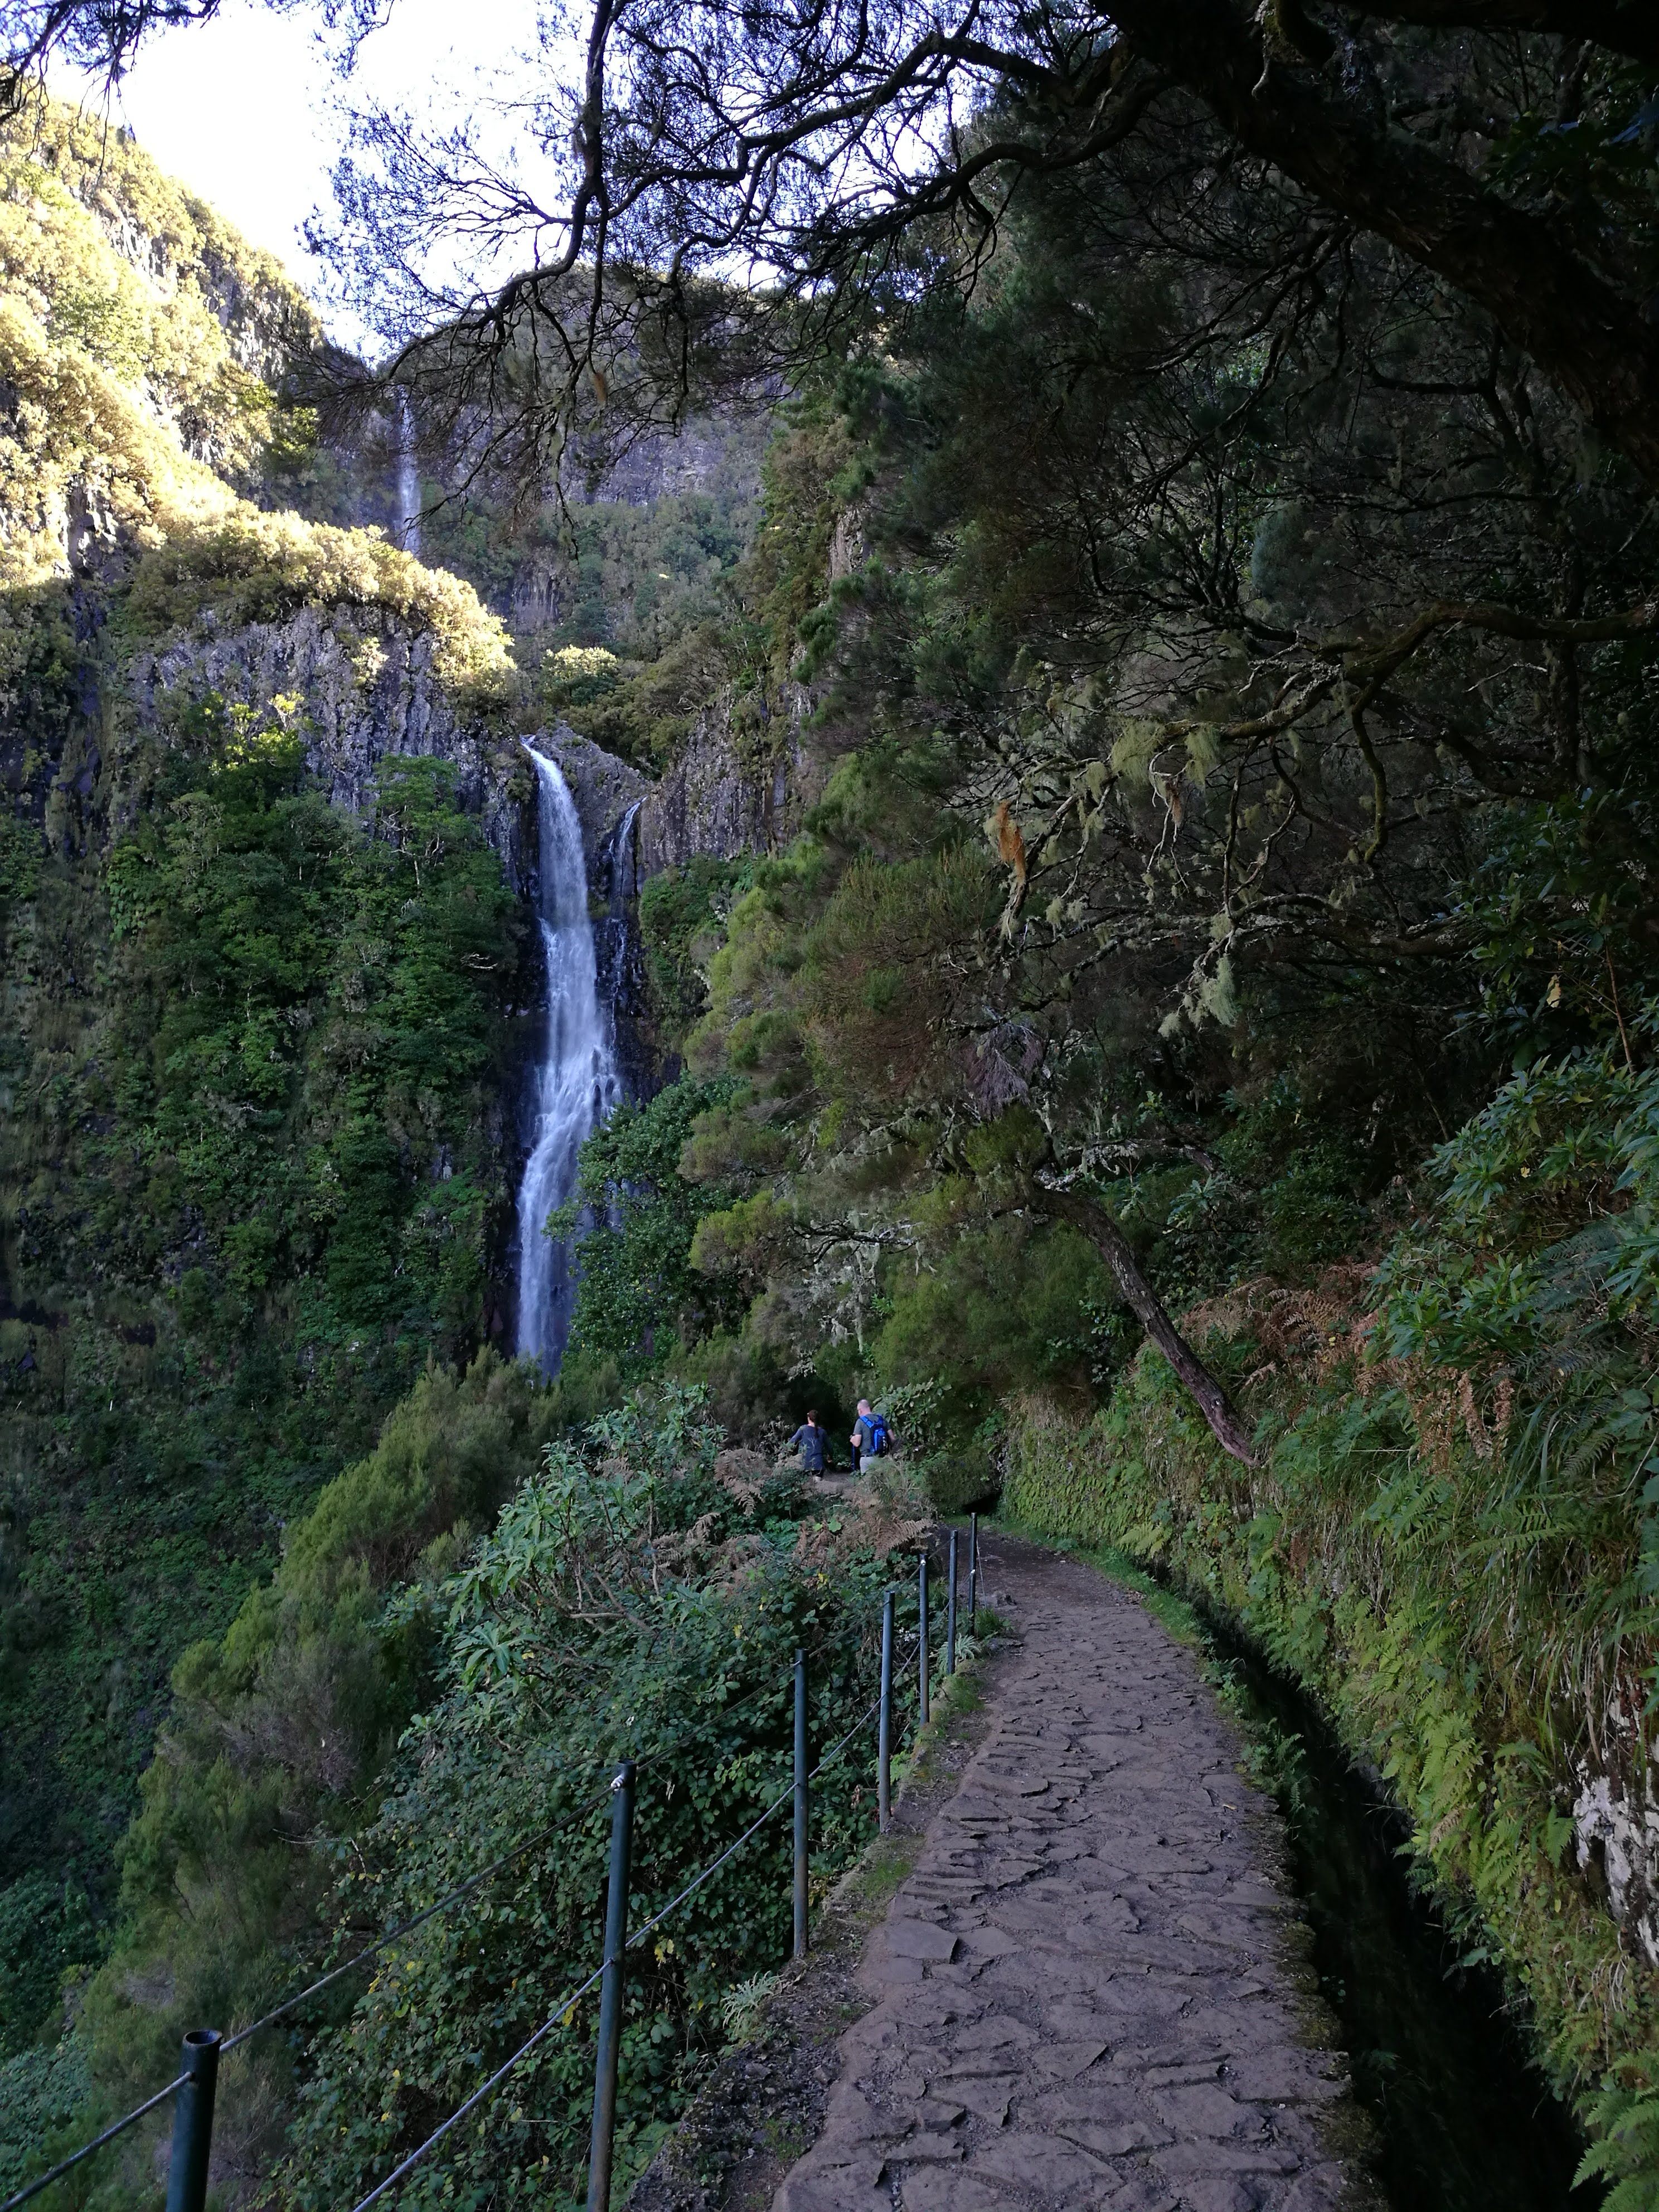 The Risco waterfall